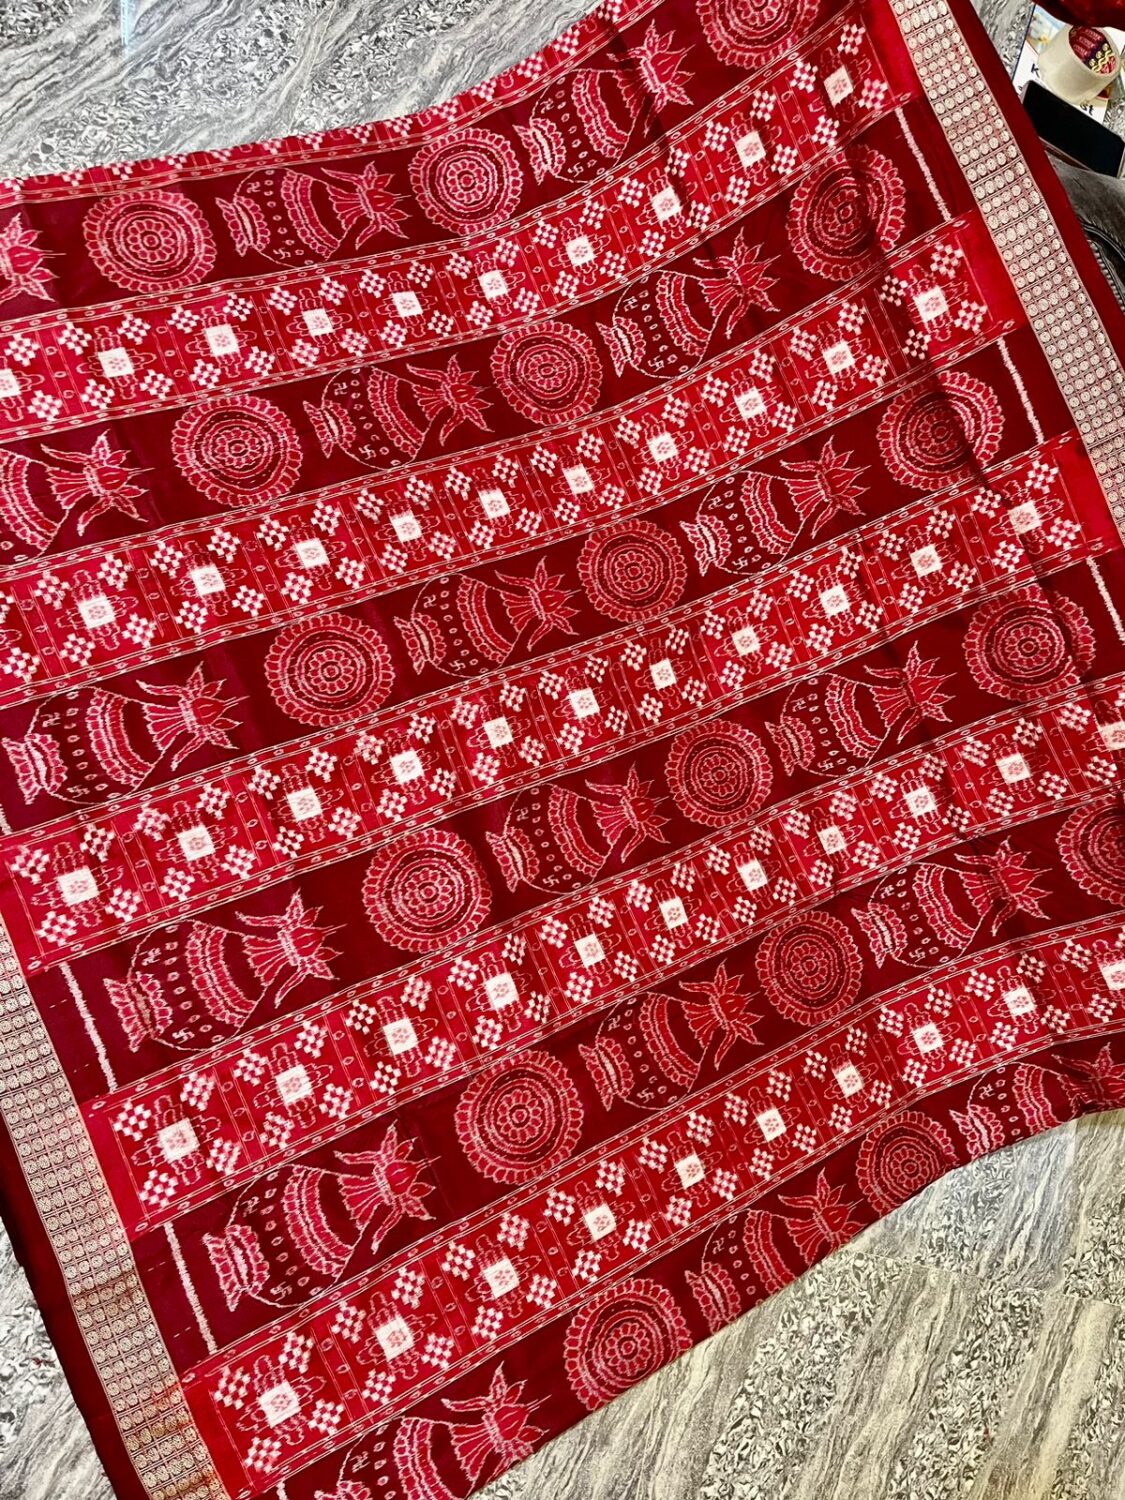 Buy OdiKala sambalpuri cotton saree(Pasapalli design in red color base) at  Amazon.in